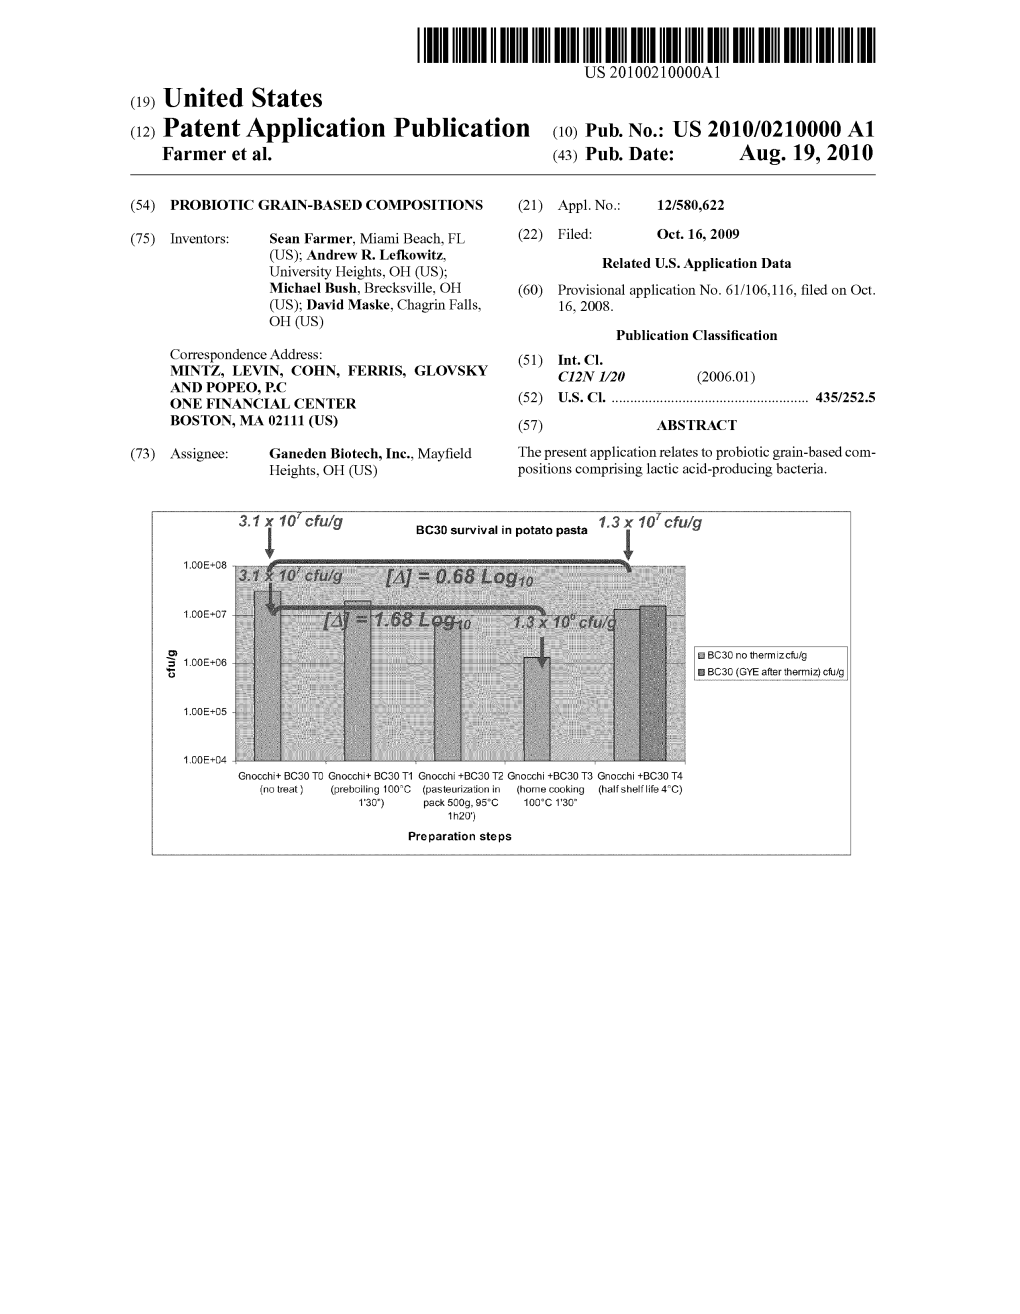 (12) Patent Application Publication (10) Pub. No.: US 2010/0210000 A1 Farmer Et Al